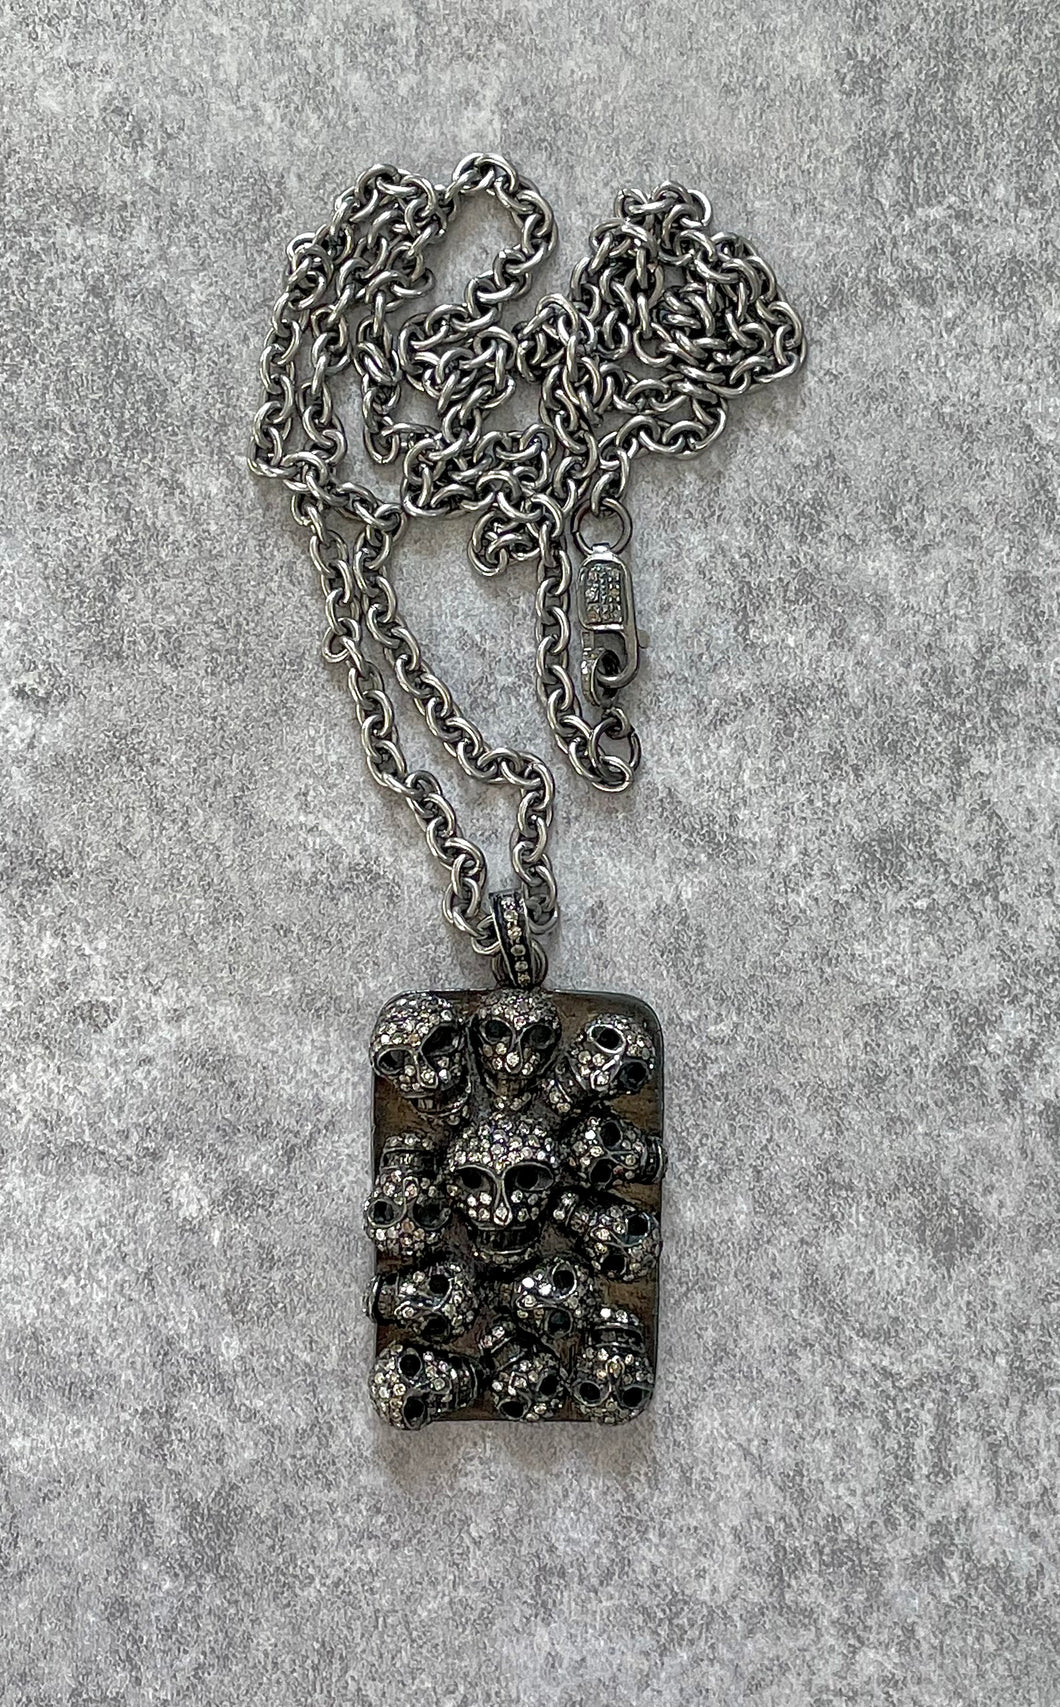 Blackened Diamond Skull Pendant on Blackened Sterling chain with Diamon Clasp